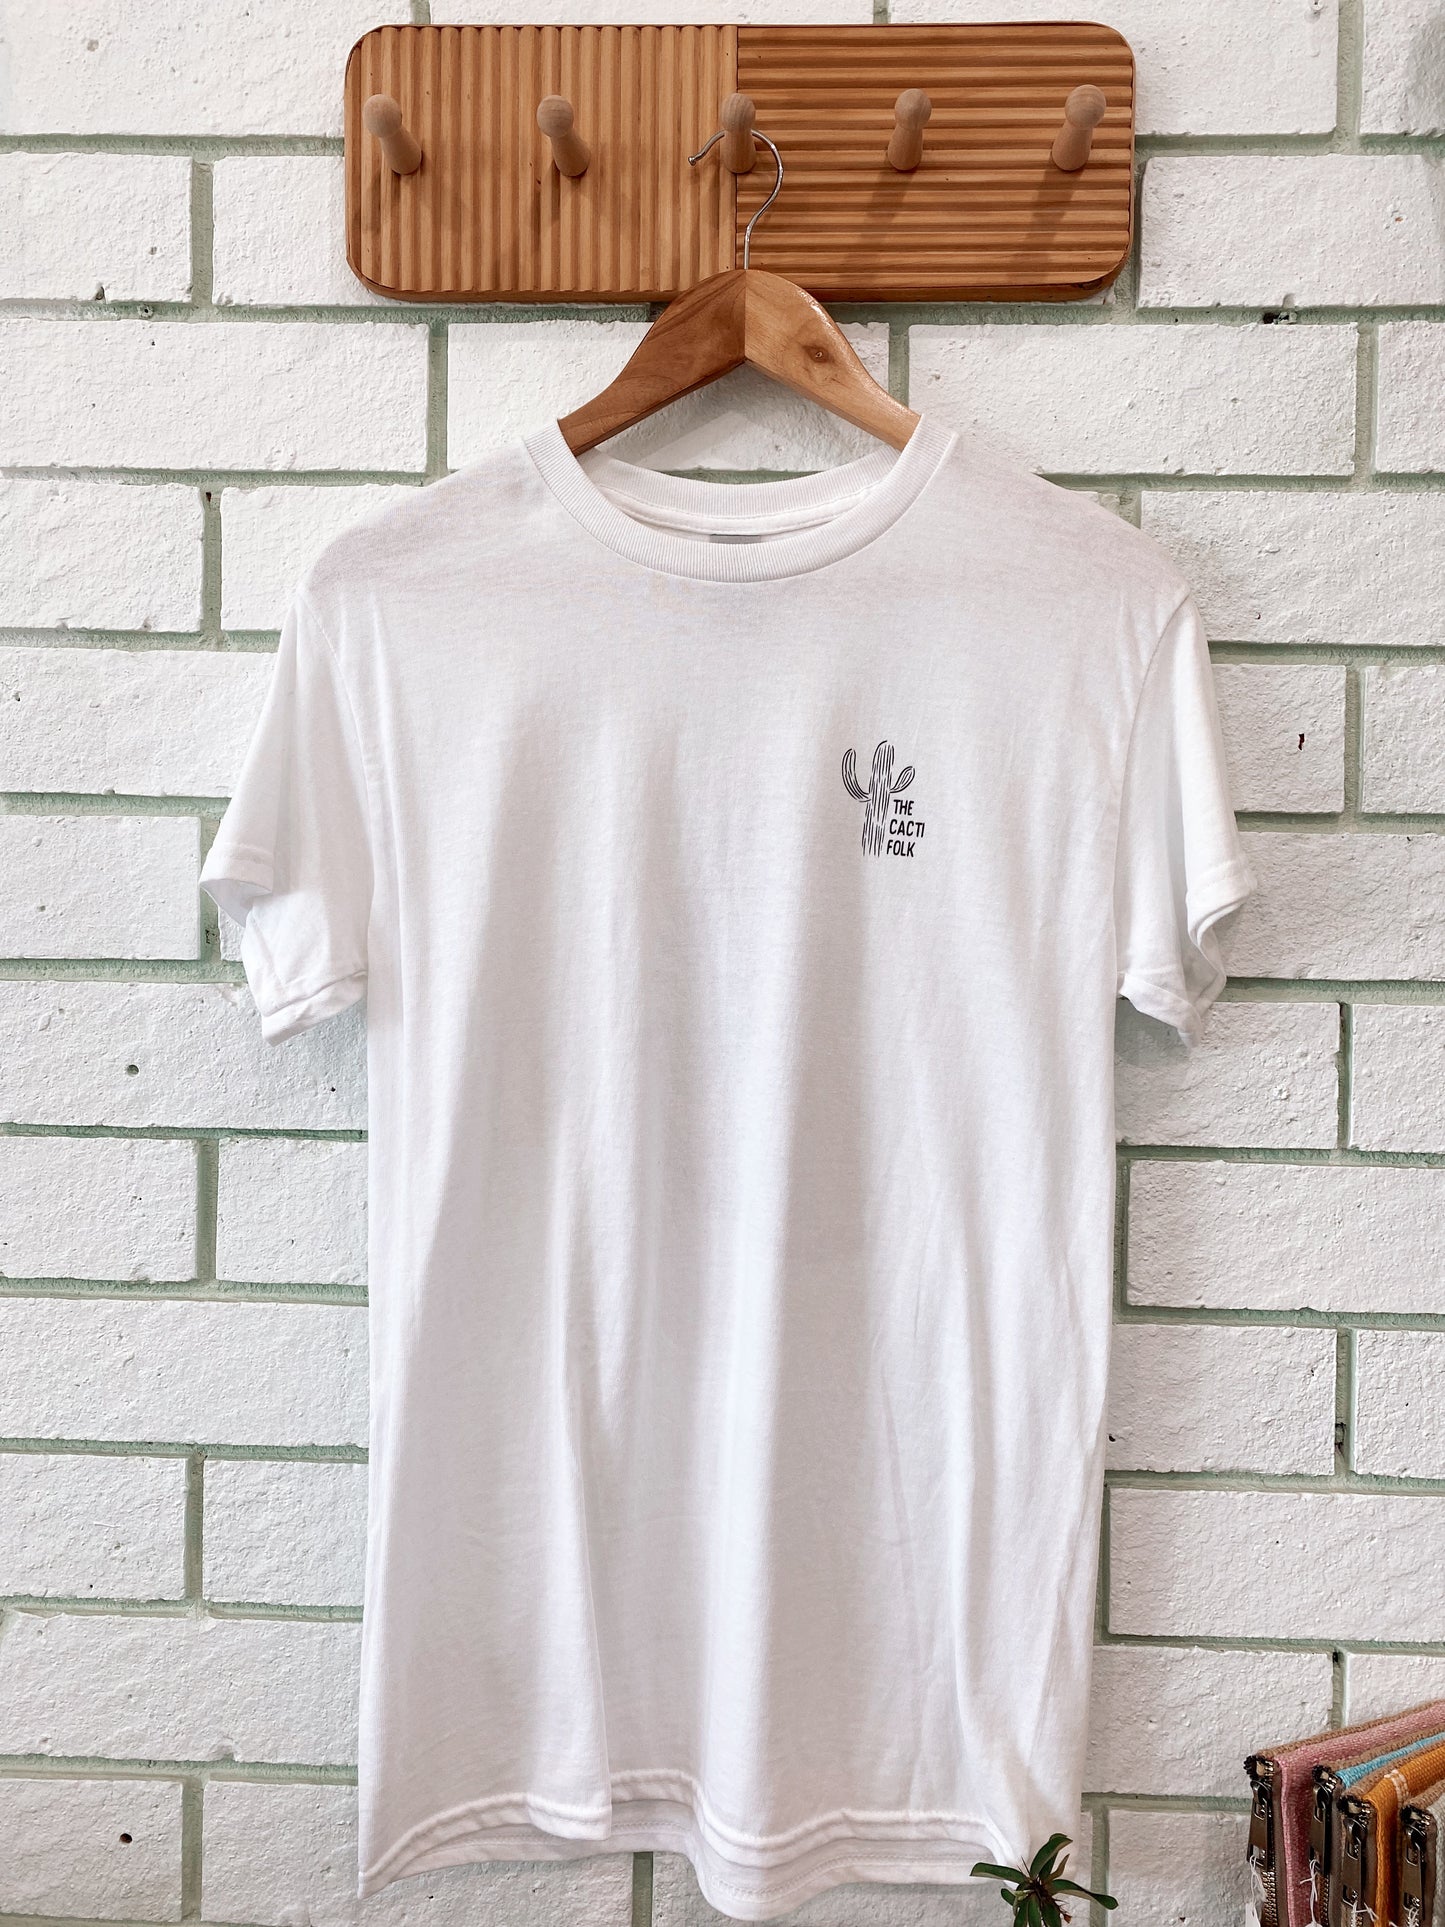 The Cacti Folk T-Shirt - White - Front Logo with Skull on Back